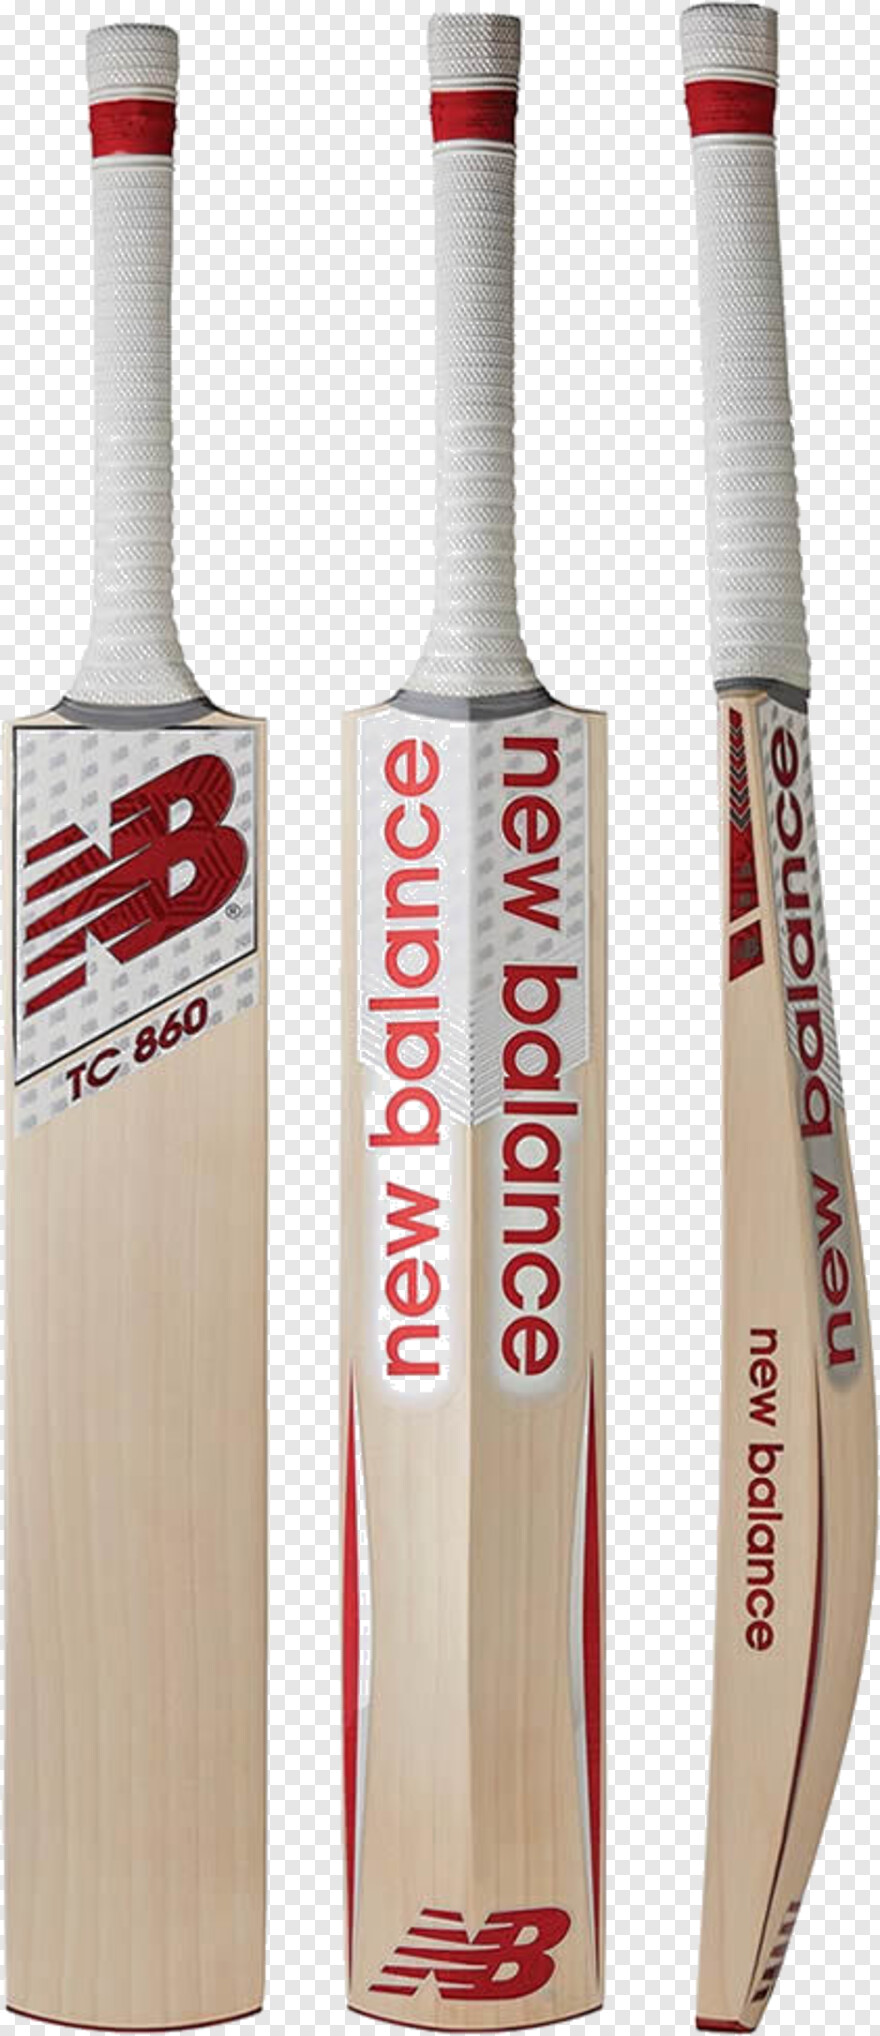  Cricket Kit, Cricket Vector, Cricket Cup, Cricket Images, Cricket Bat And Ball, Cricket Clipart